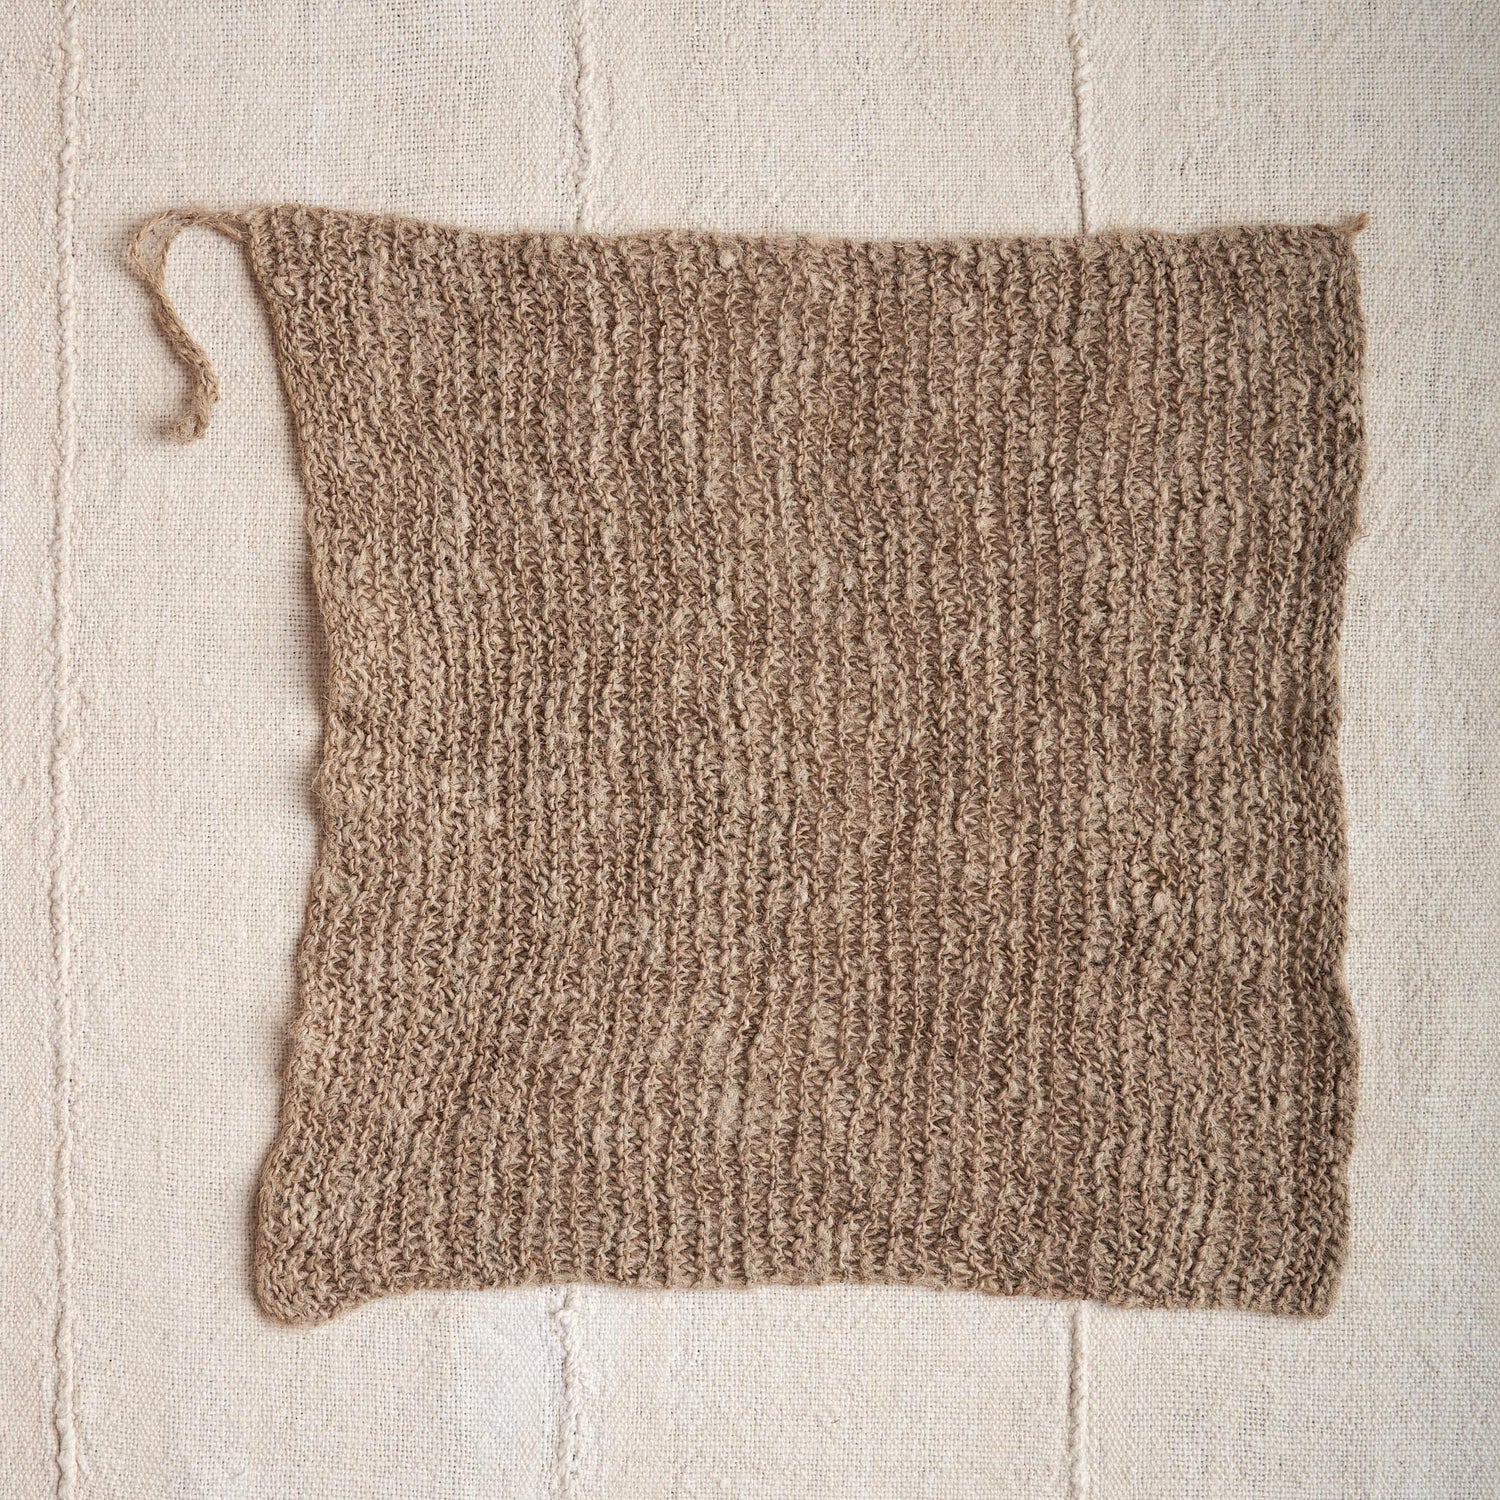 Hand-Knit Wild Nettle Exfoliating Cloth